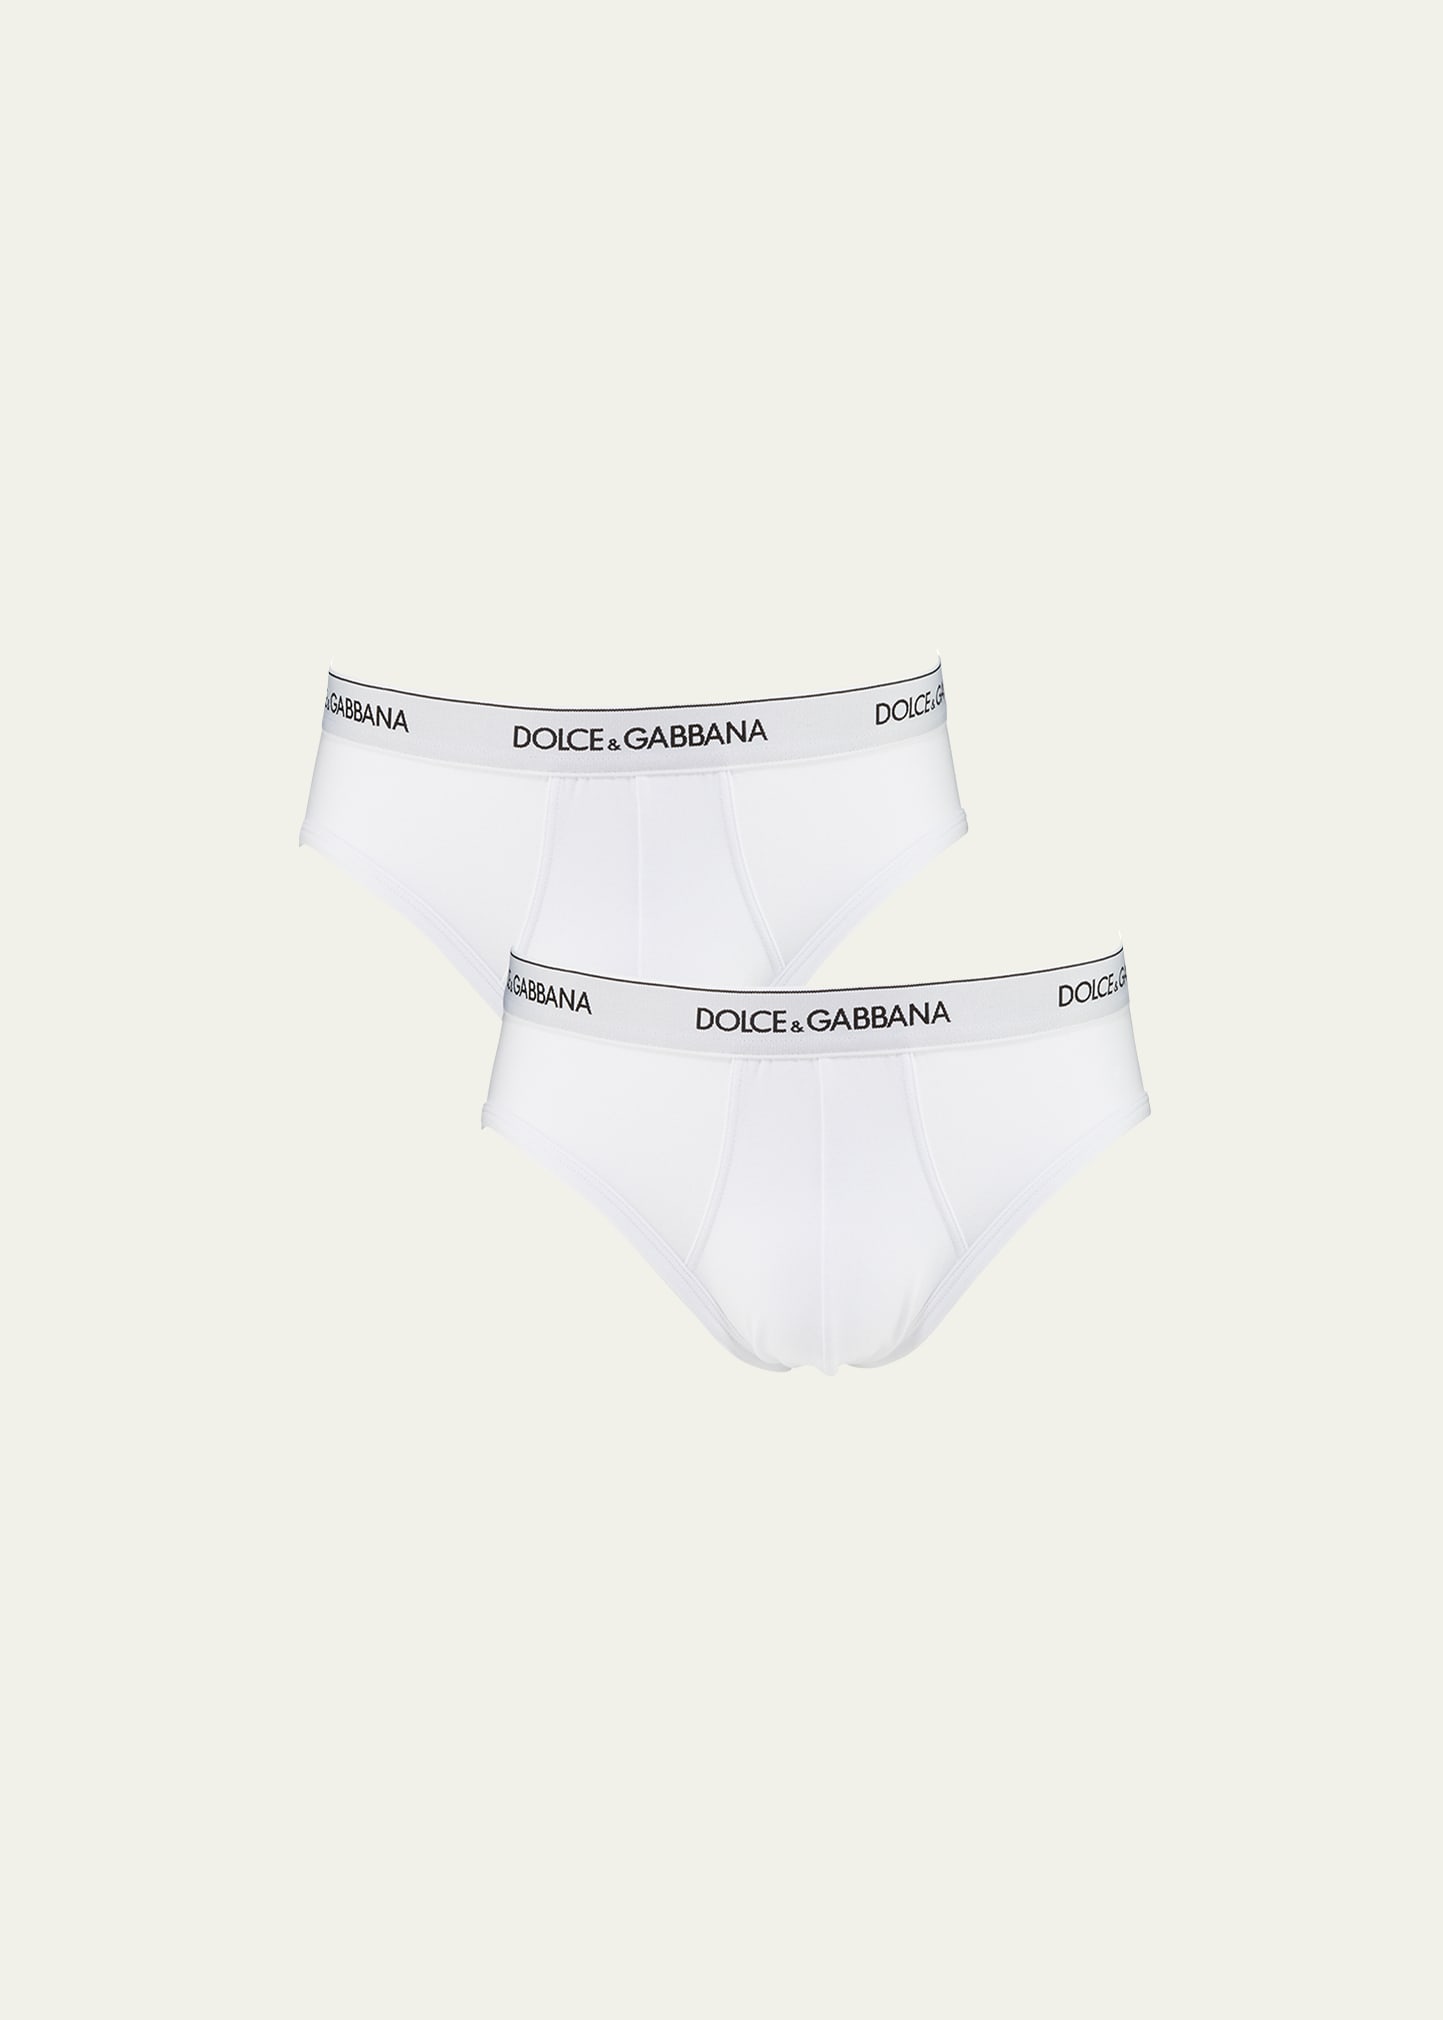 Dolce&Gabbana Men's 2-Pack Slip Medio Briefs - Bergdorf Goodman